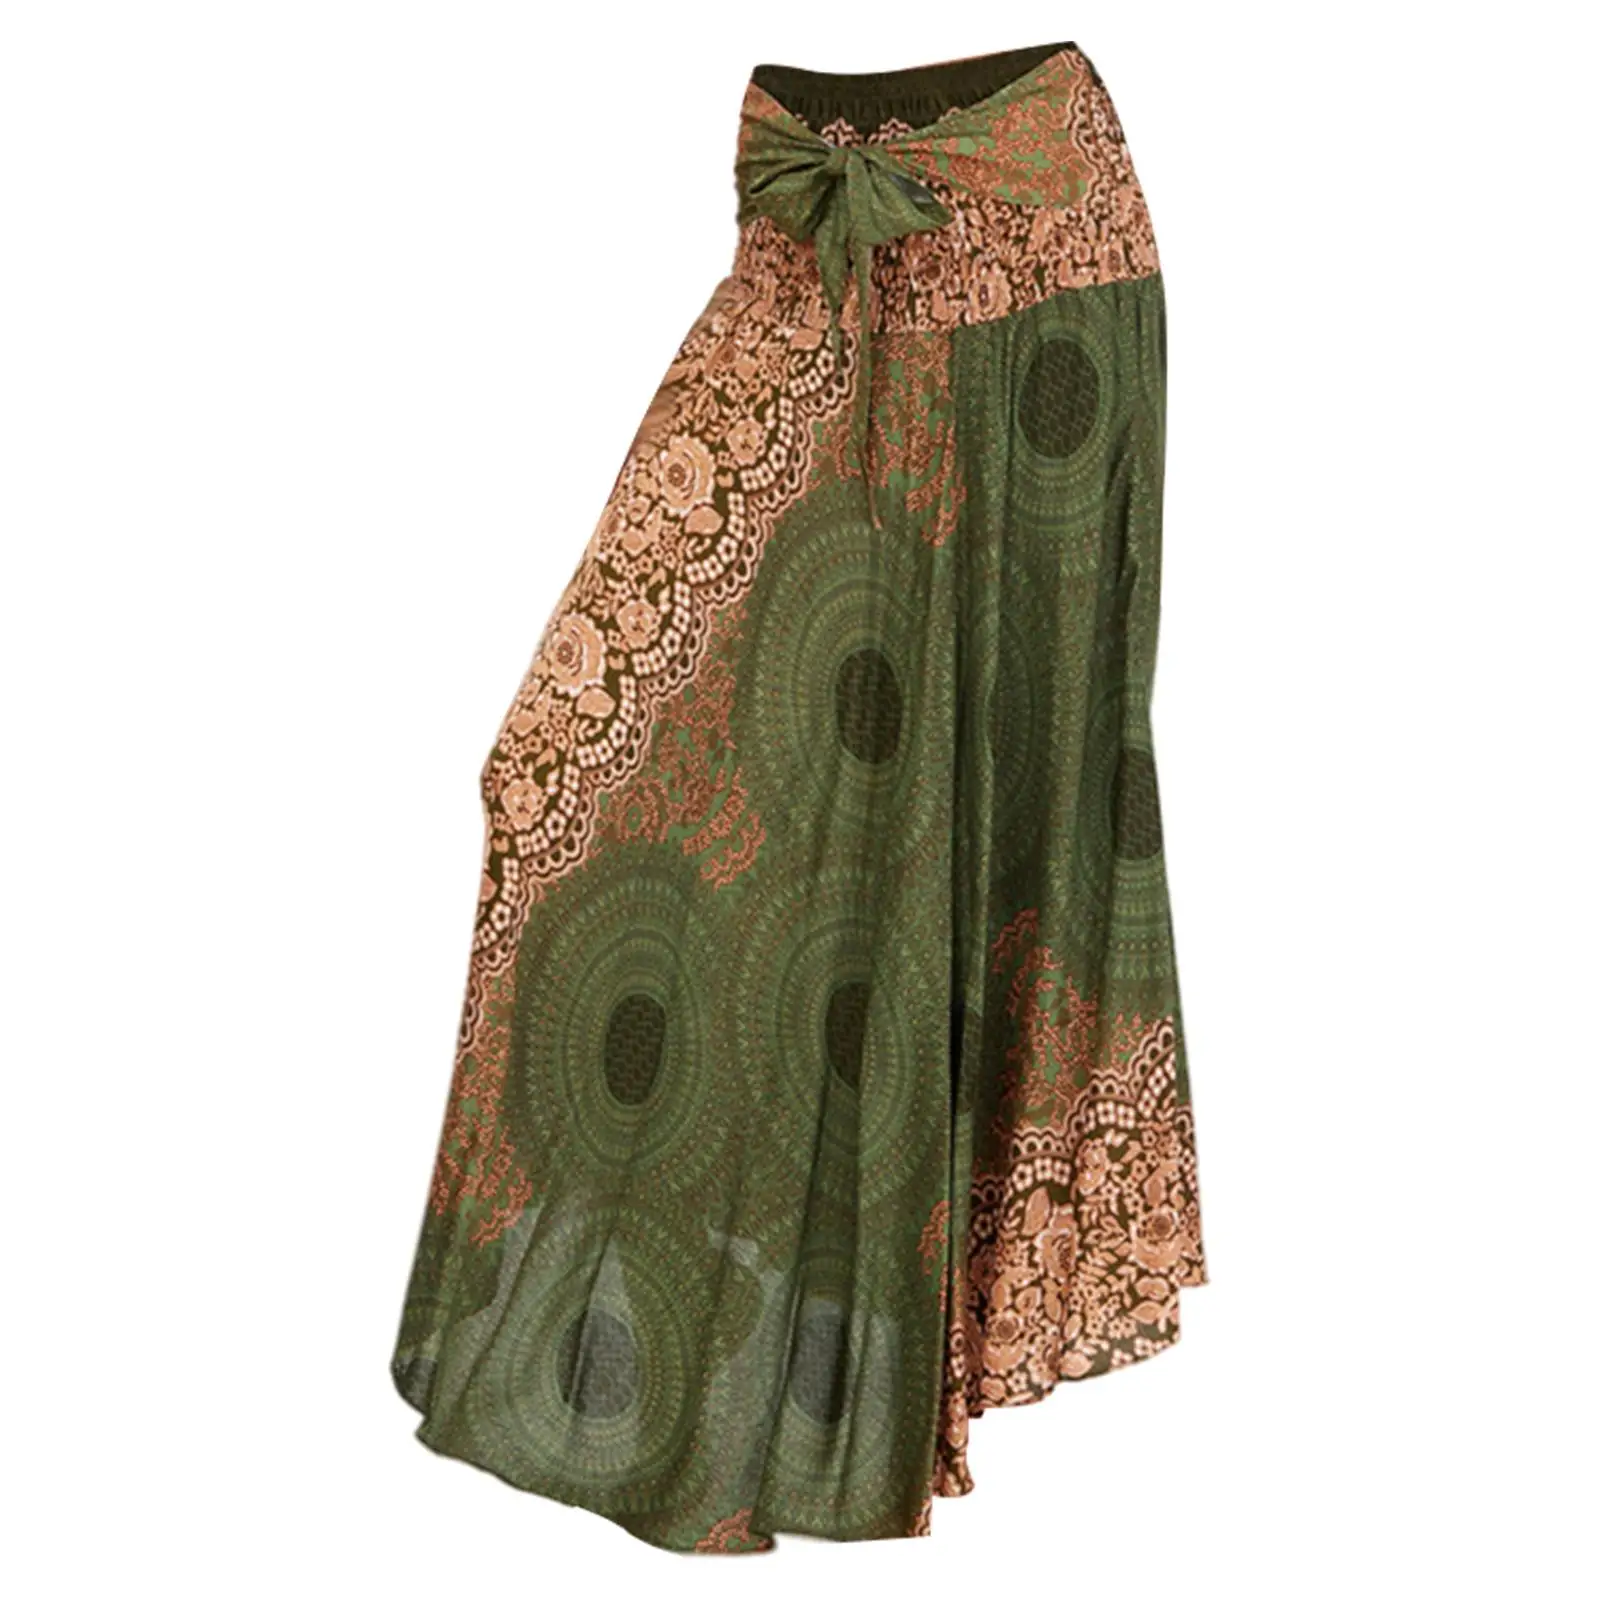 Long Boho Maxi Skirt Beach Dress Printed Bohemian Dancing Costume Clothing Gypsy for Women Adults Party Dance High Waisted